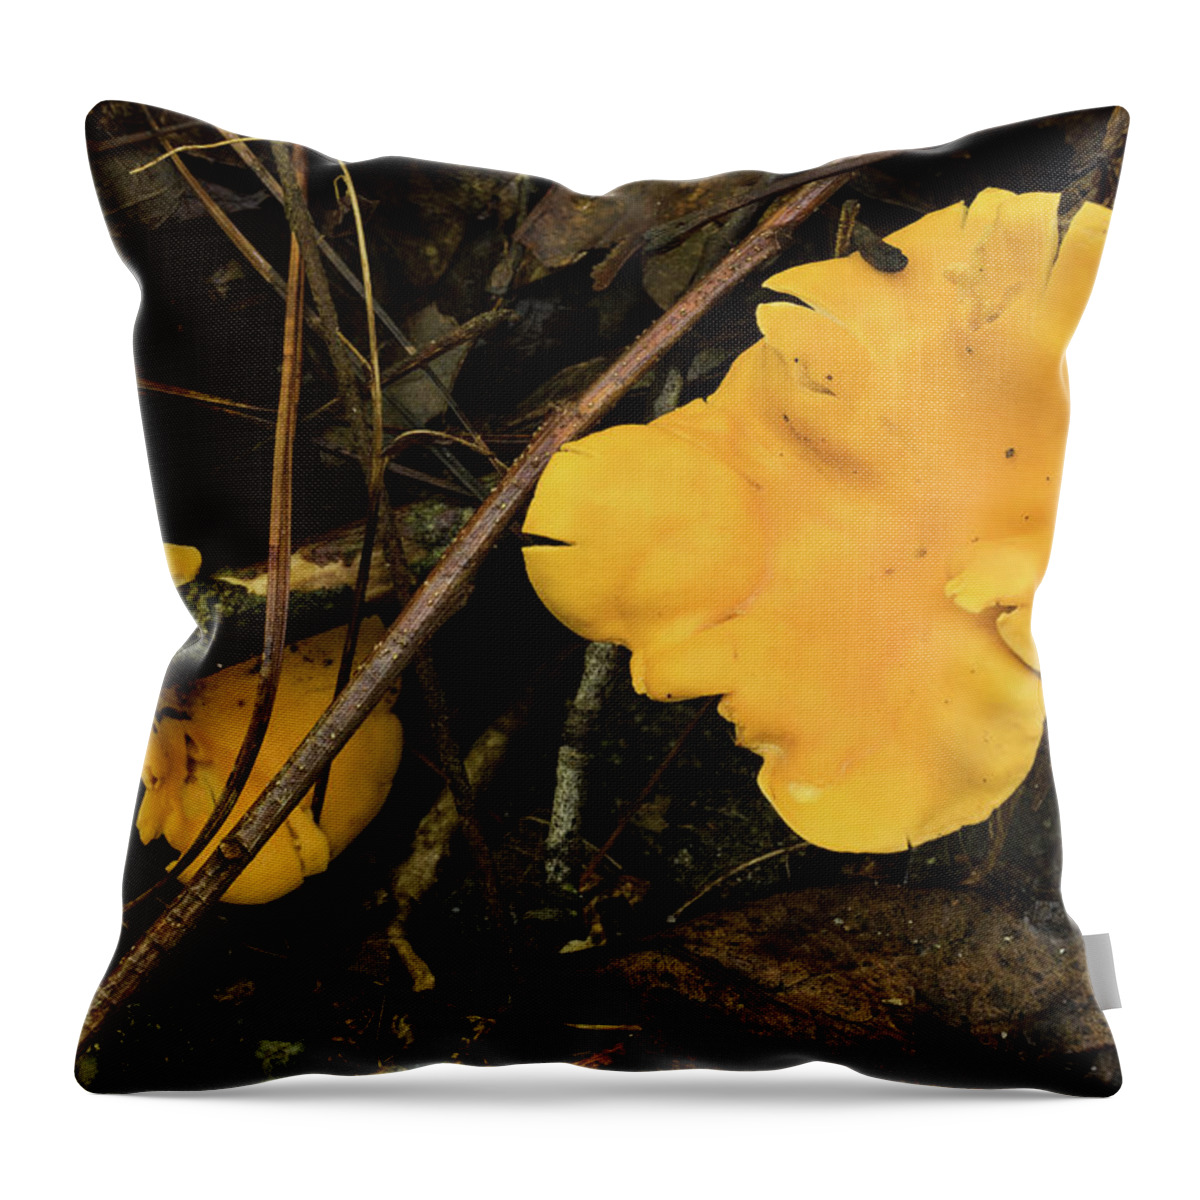 Mcdowell County Throw Pillow featuring the photograph The Golden Mushroom by Joni Eskridge